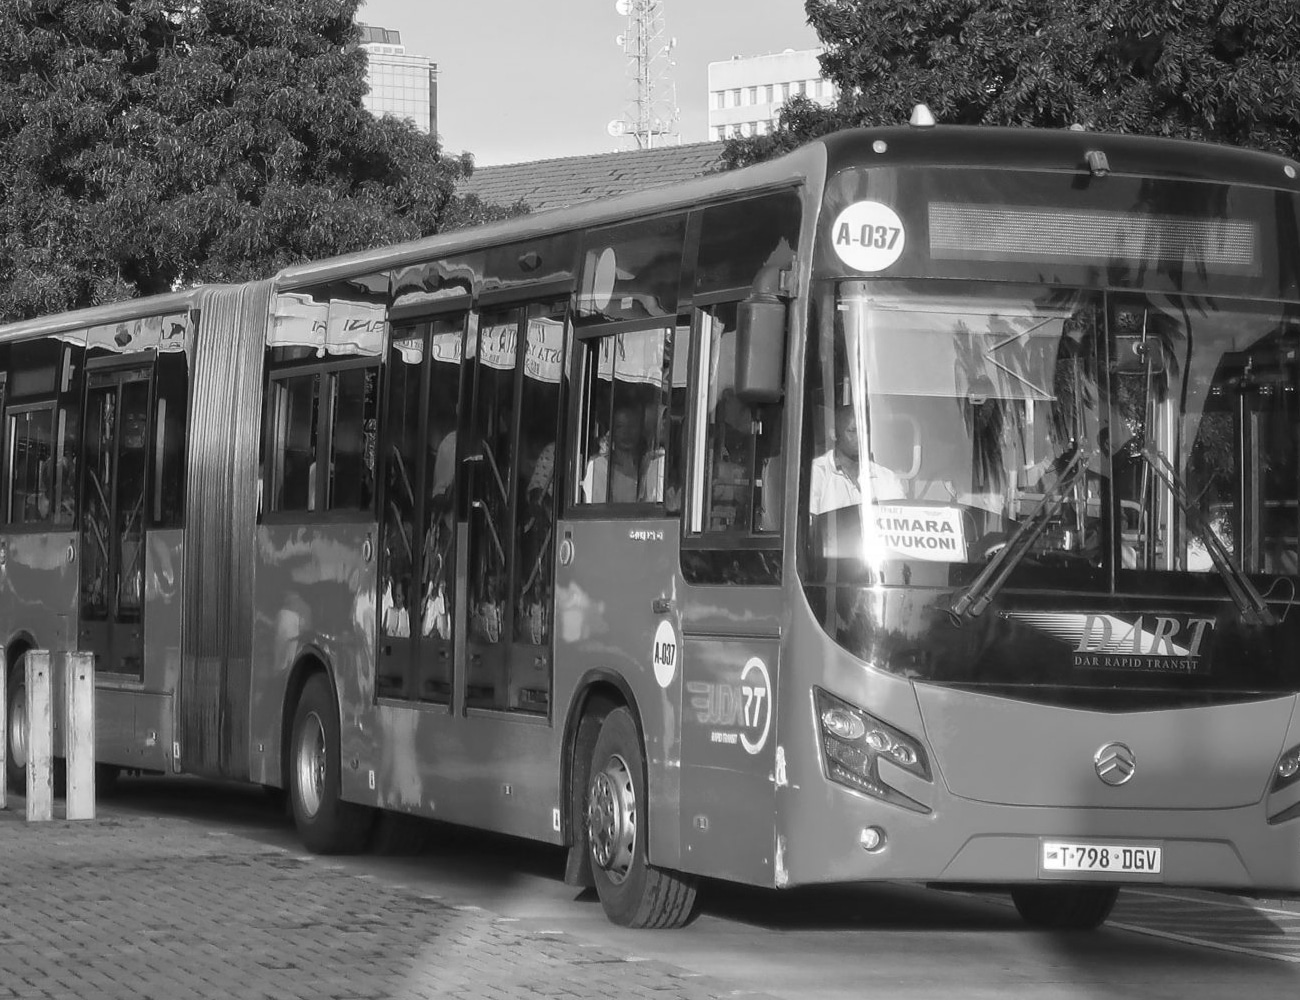 Public Transportation in Dar es Salaam